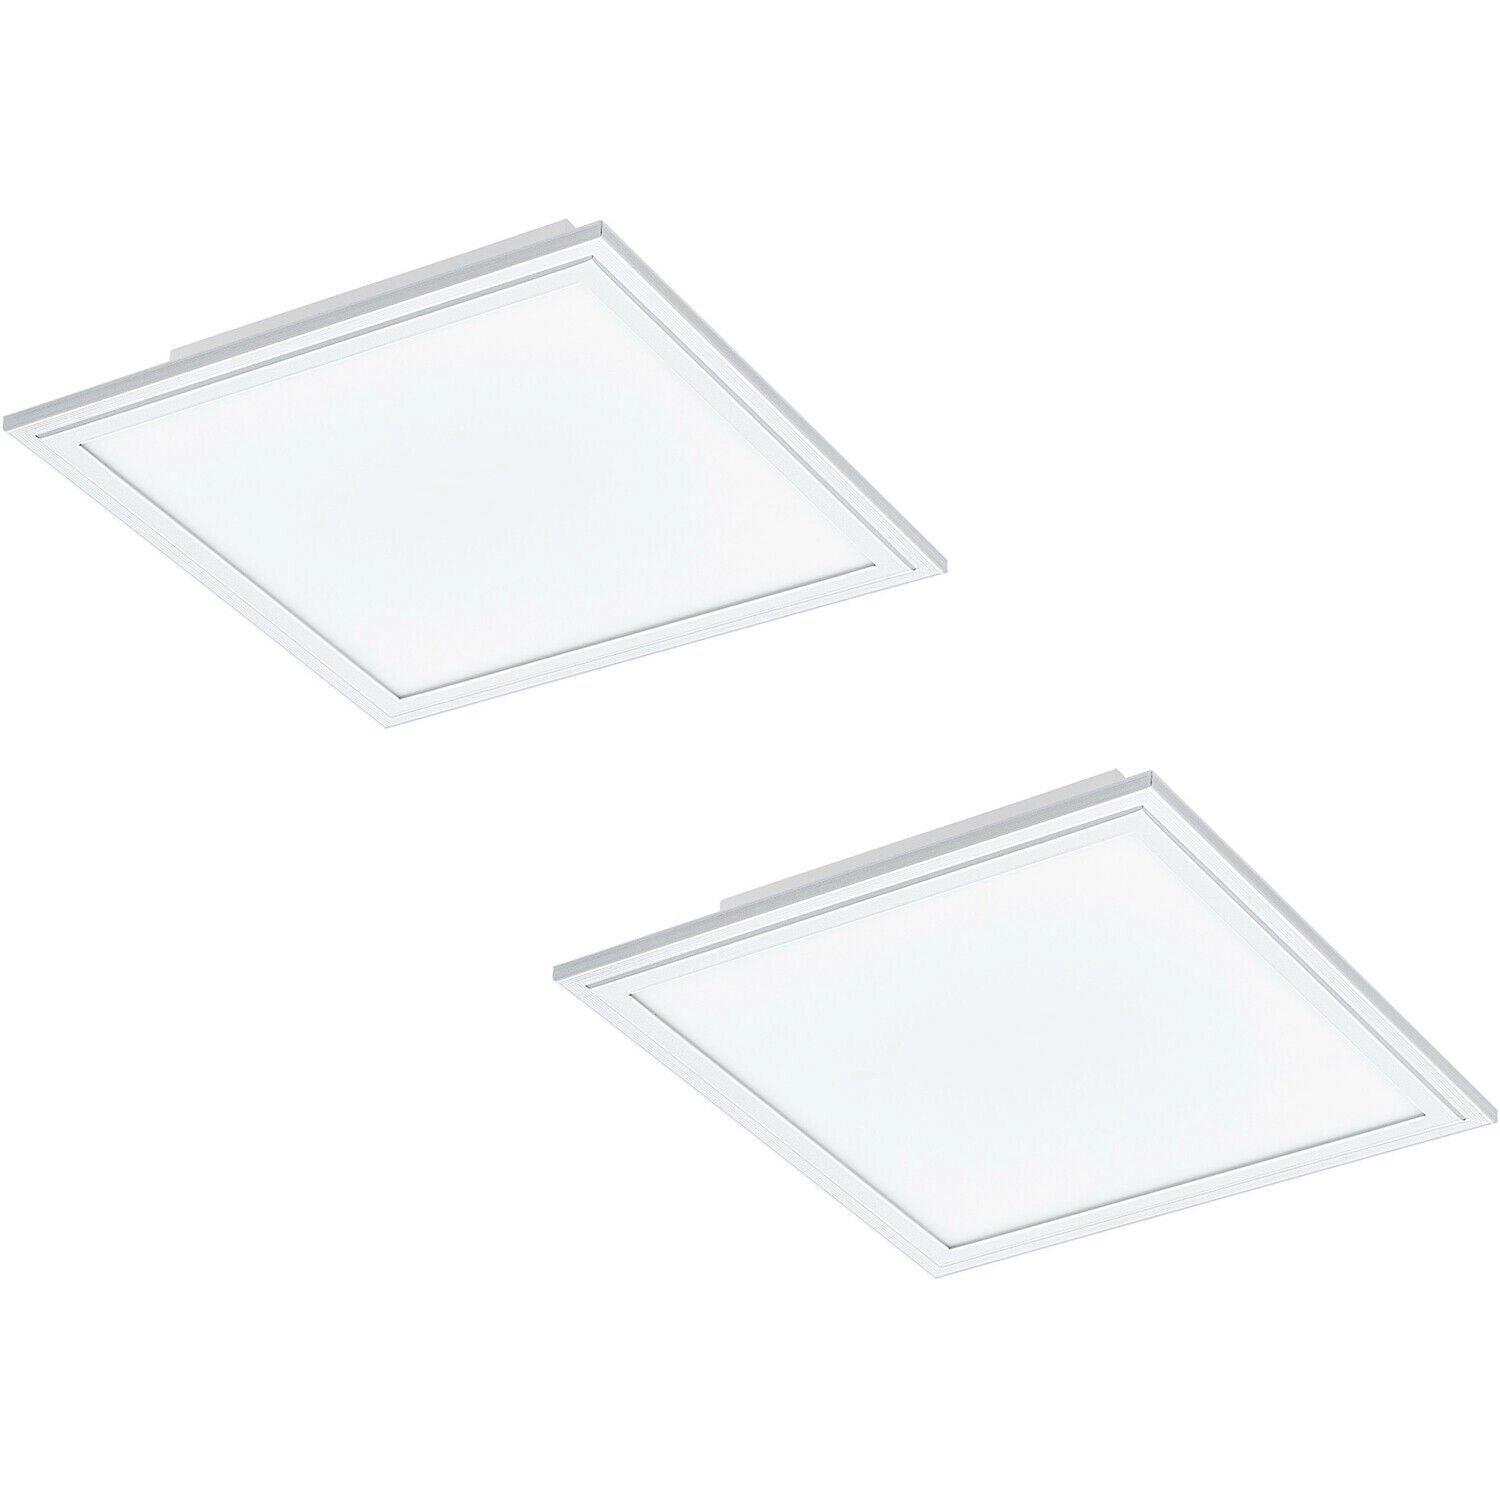 2 PACK Wall / Ceiling Light White Aluminium 300mm Square Panel 16W LED 4000K